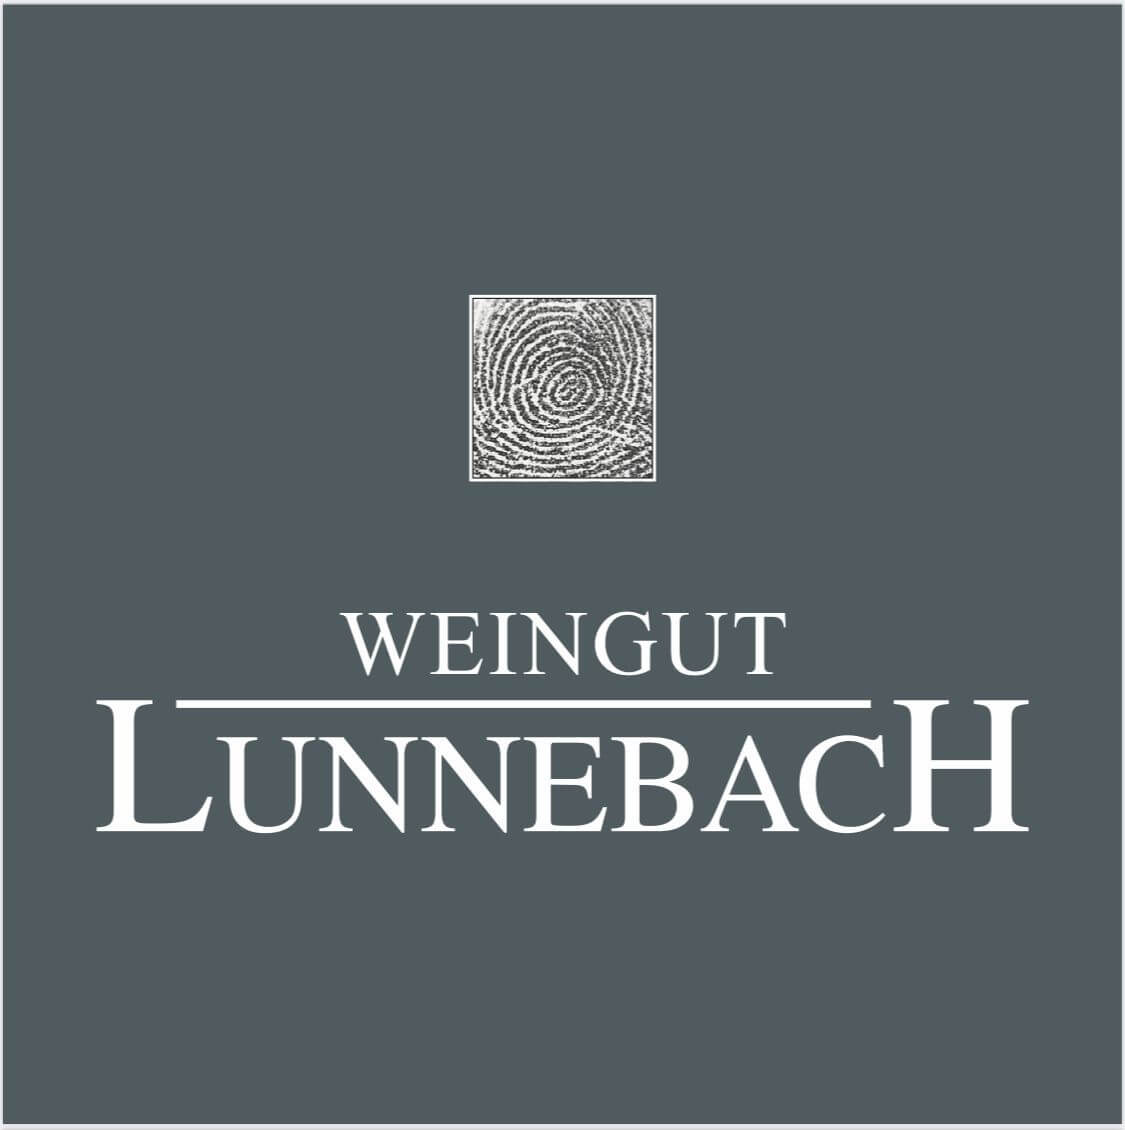 Lunnebach